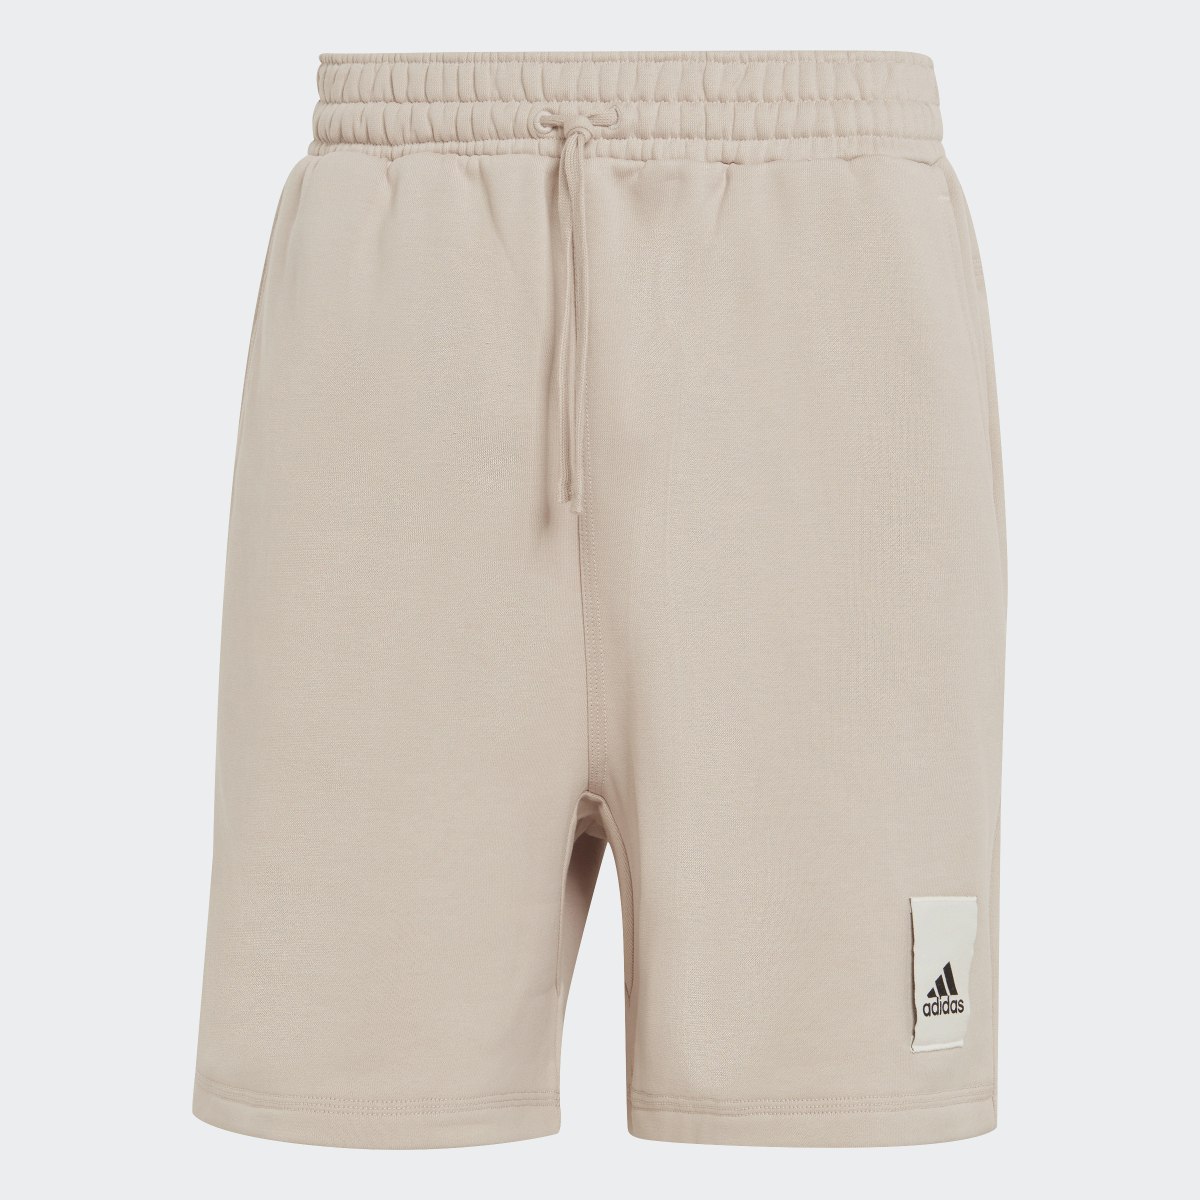 Adidas Lounge Fleece Shorts. 4